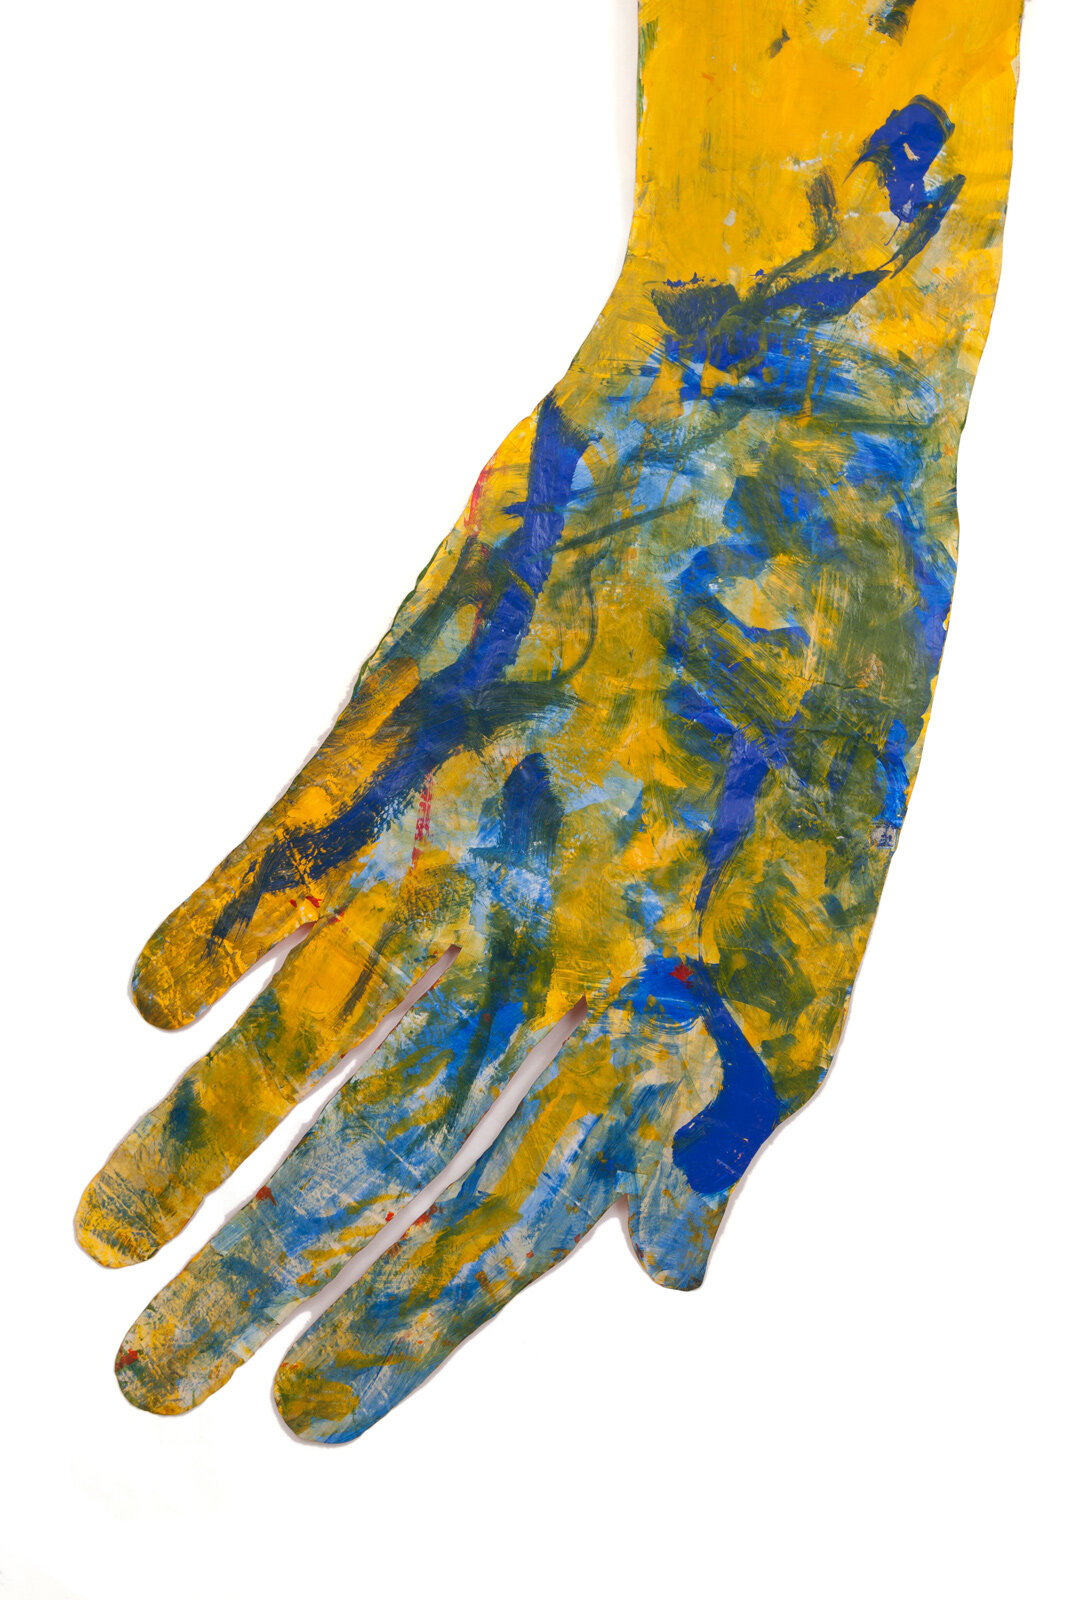 Giant Hand Six, detail